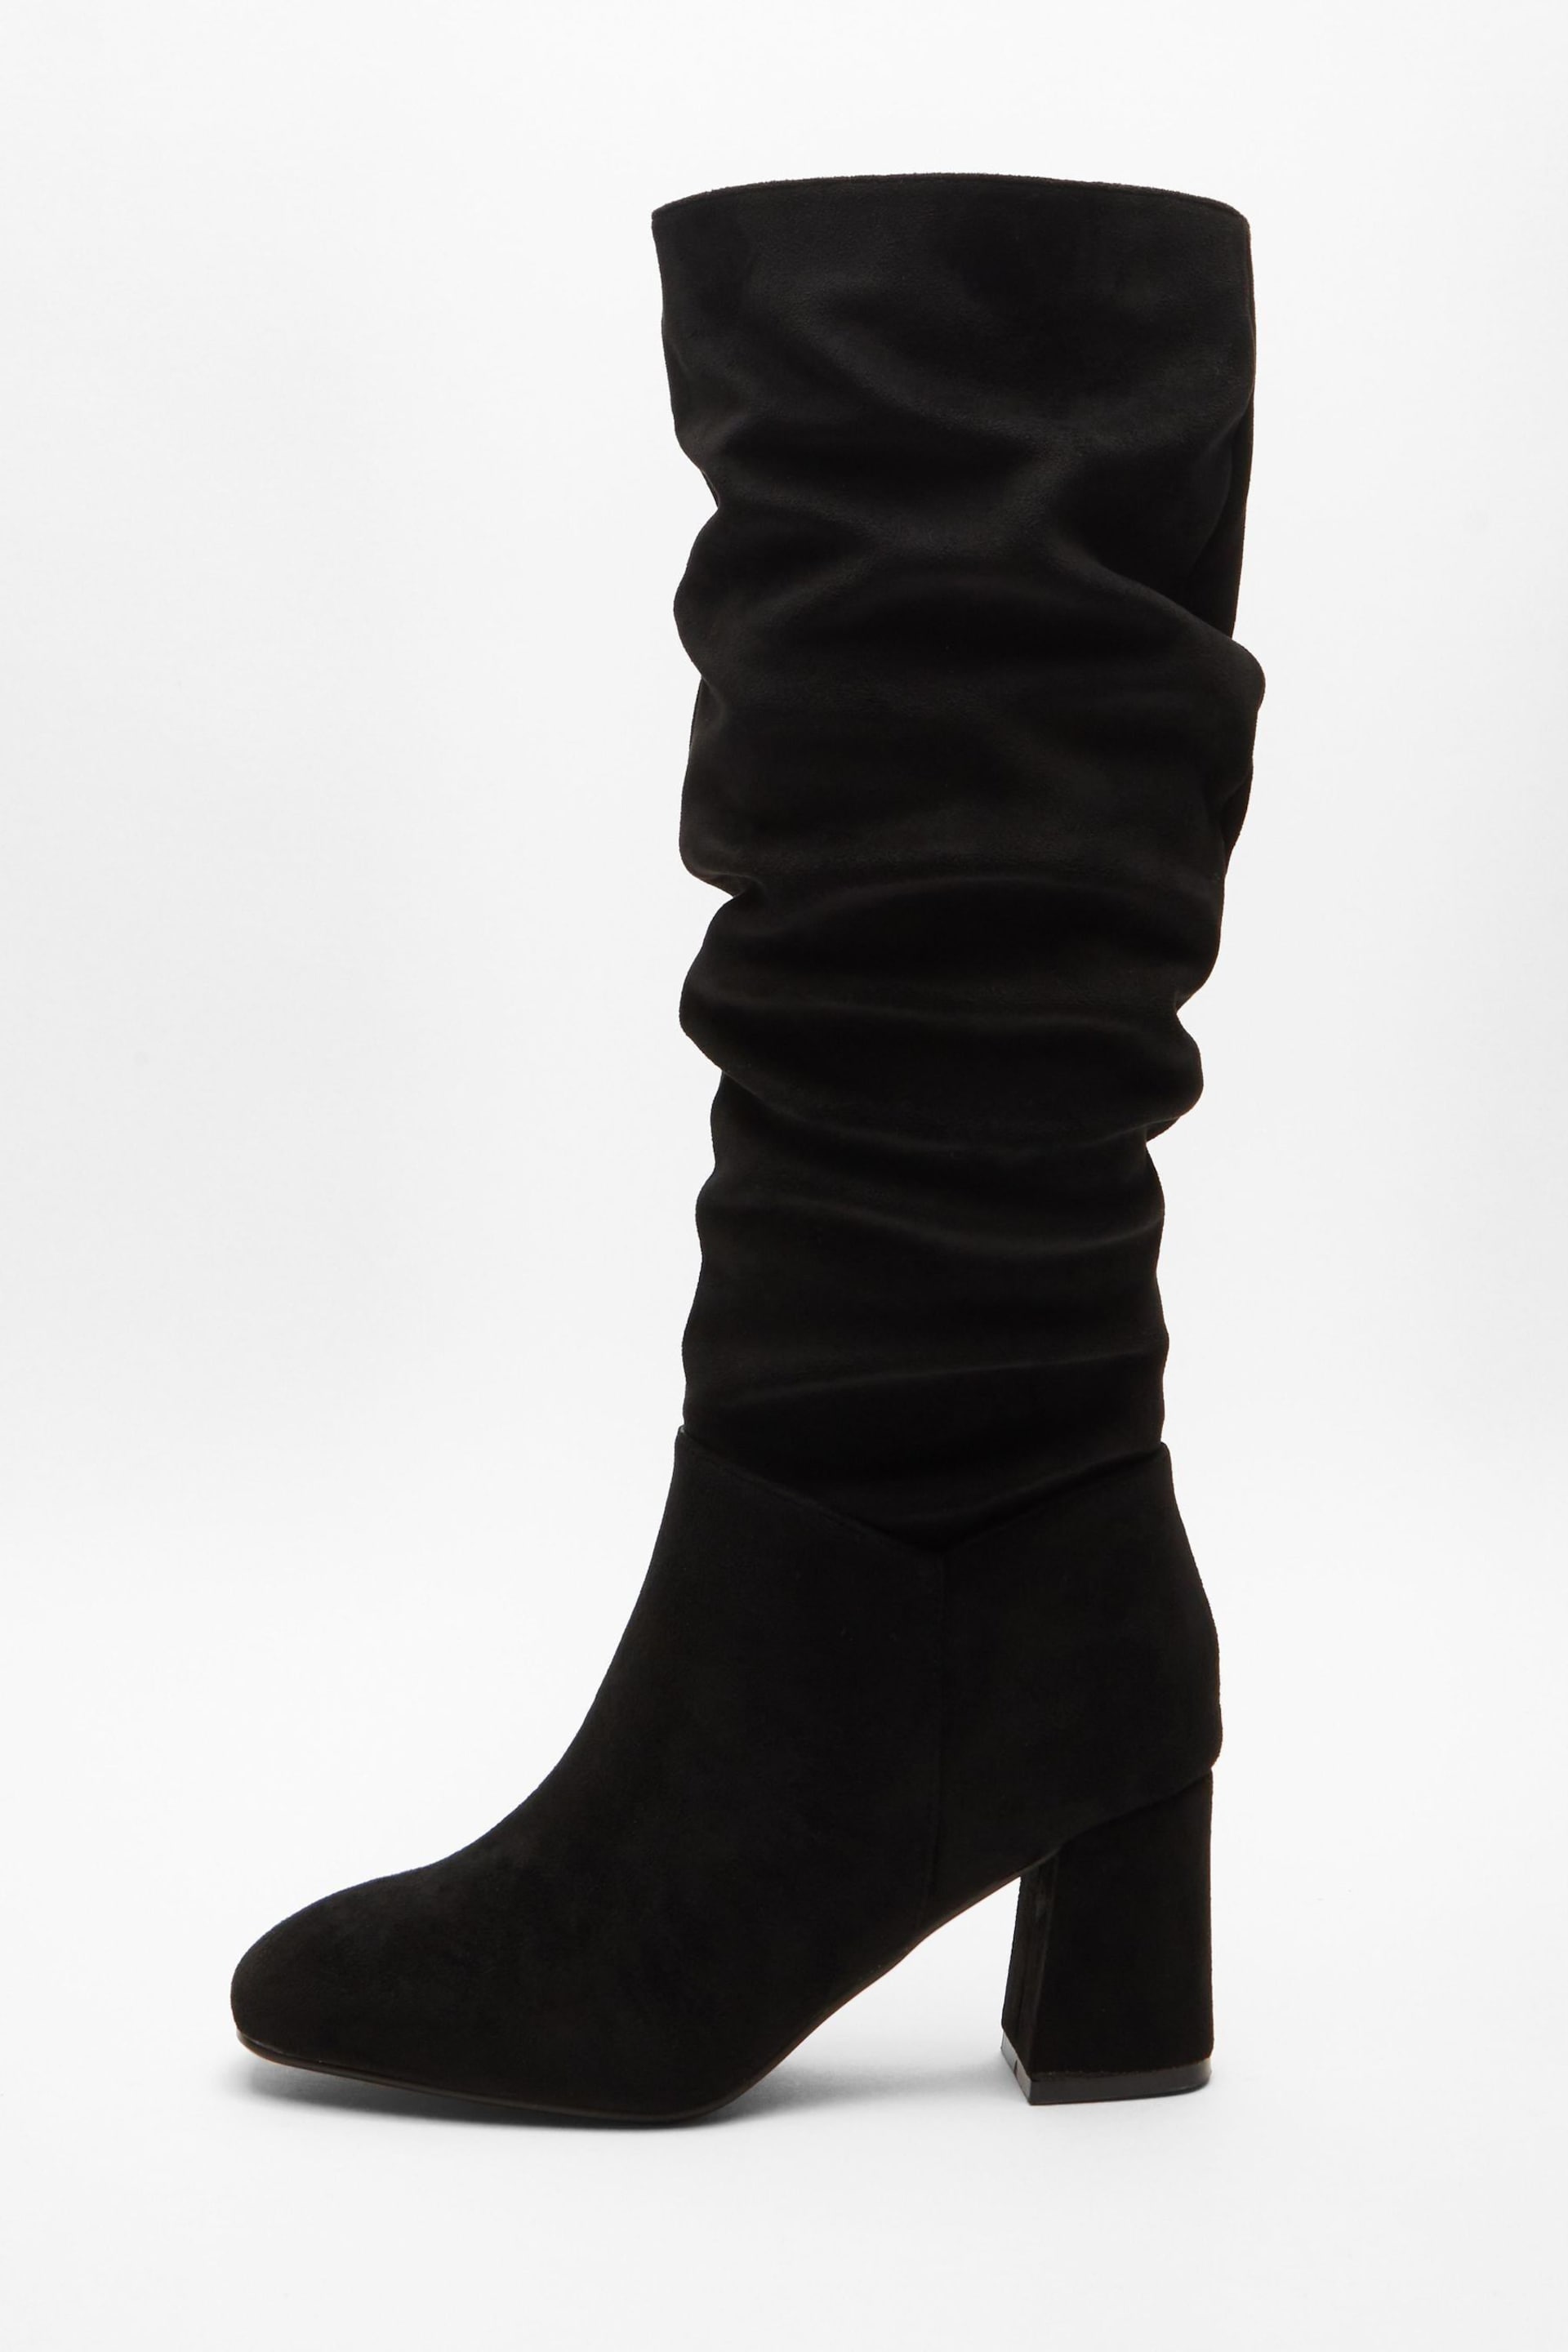 Quiz Black Ruched Block Heel Knee High Boots - Image 2 of 5